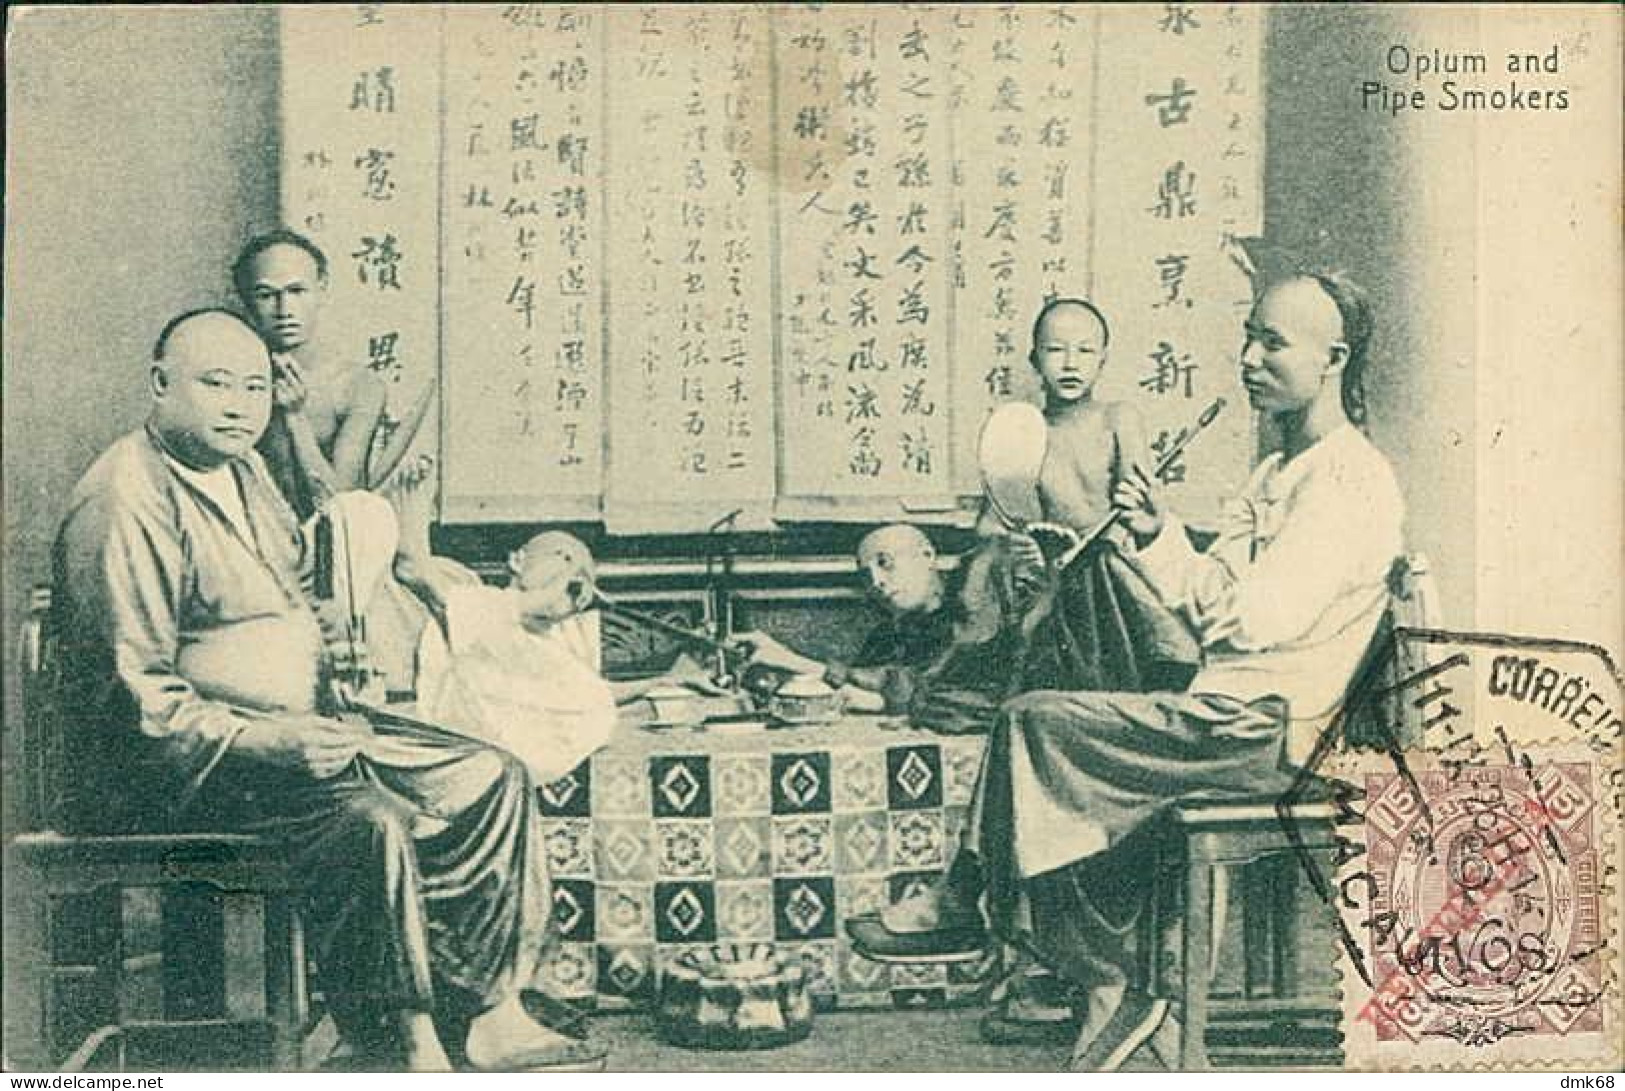 CHINA - OPIUM AND PIPE SMOKERS - PUB. NY M. STERNBERG / HONG KONG - MACAU OVERPRINT STAMP - YEAR 1926 (18230) - Chine